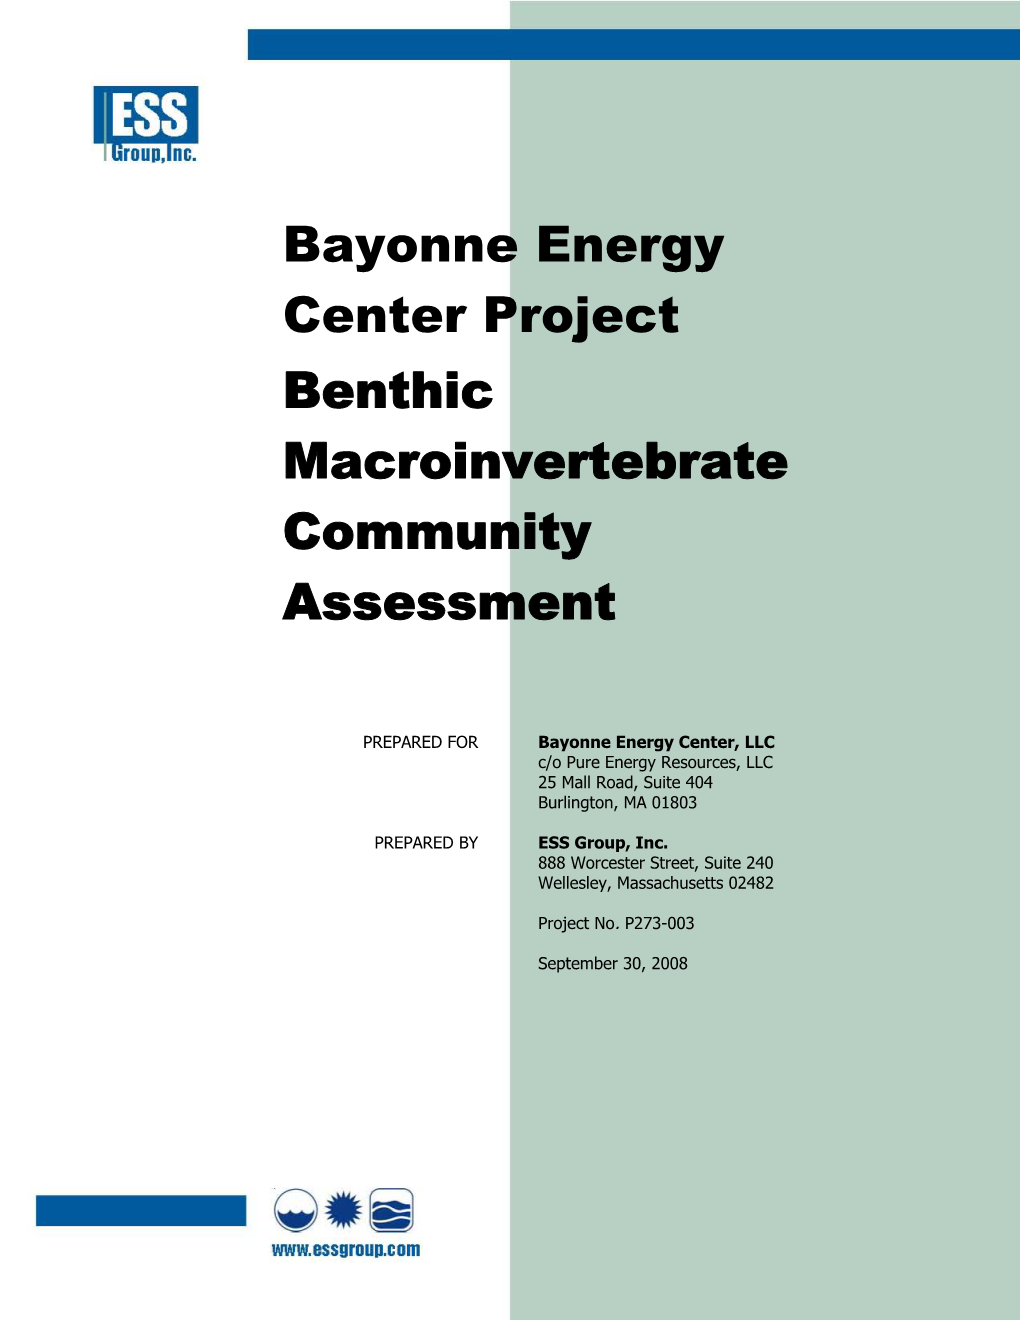 Bayonne Energy Center Project Benthic Macroinvertebrate Community Assessment